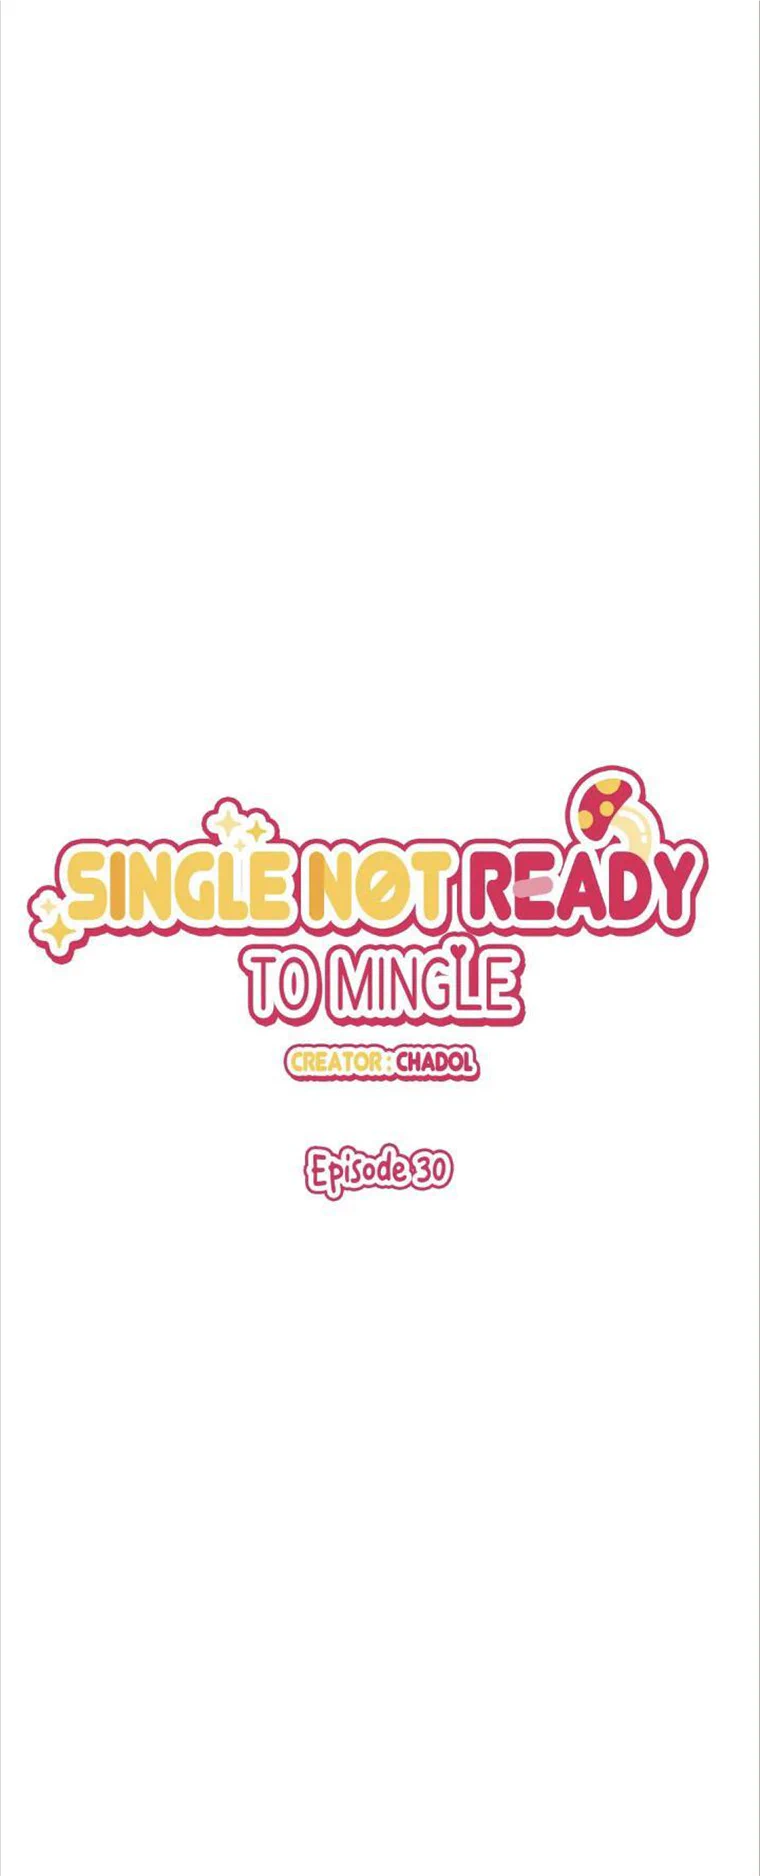 Single Not Ready To Mingle - Page 1